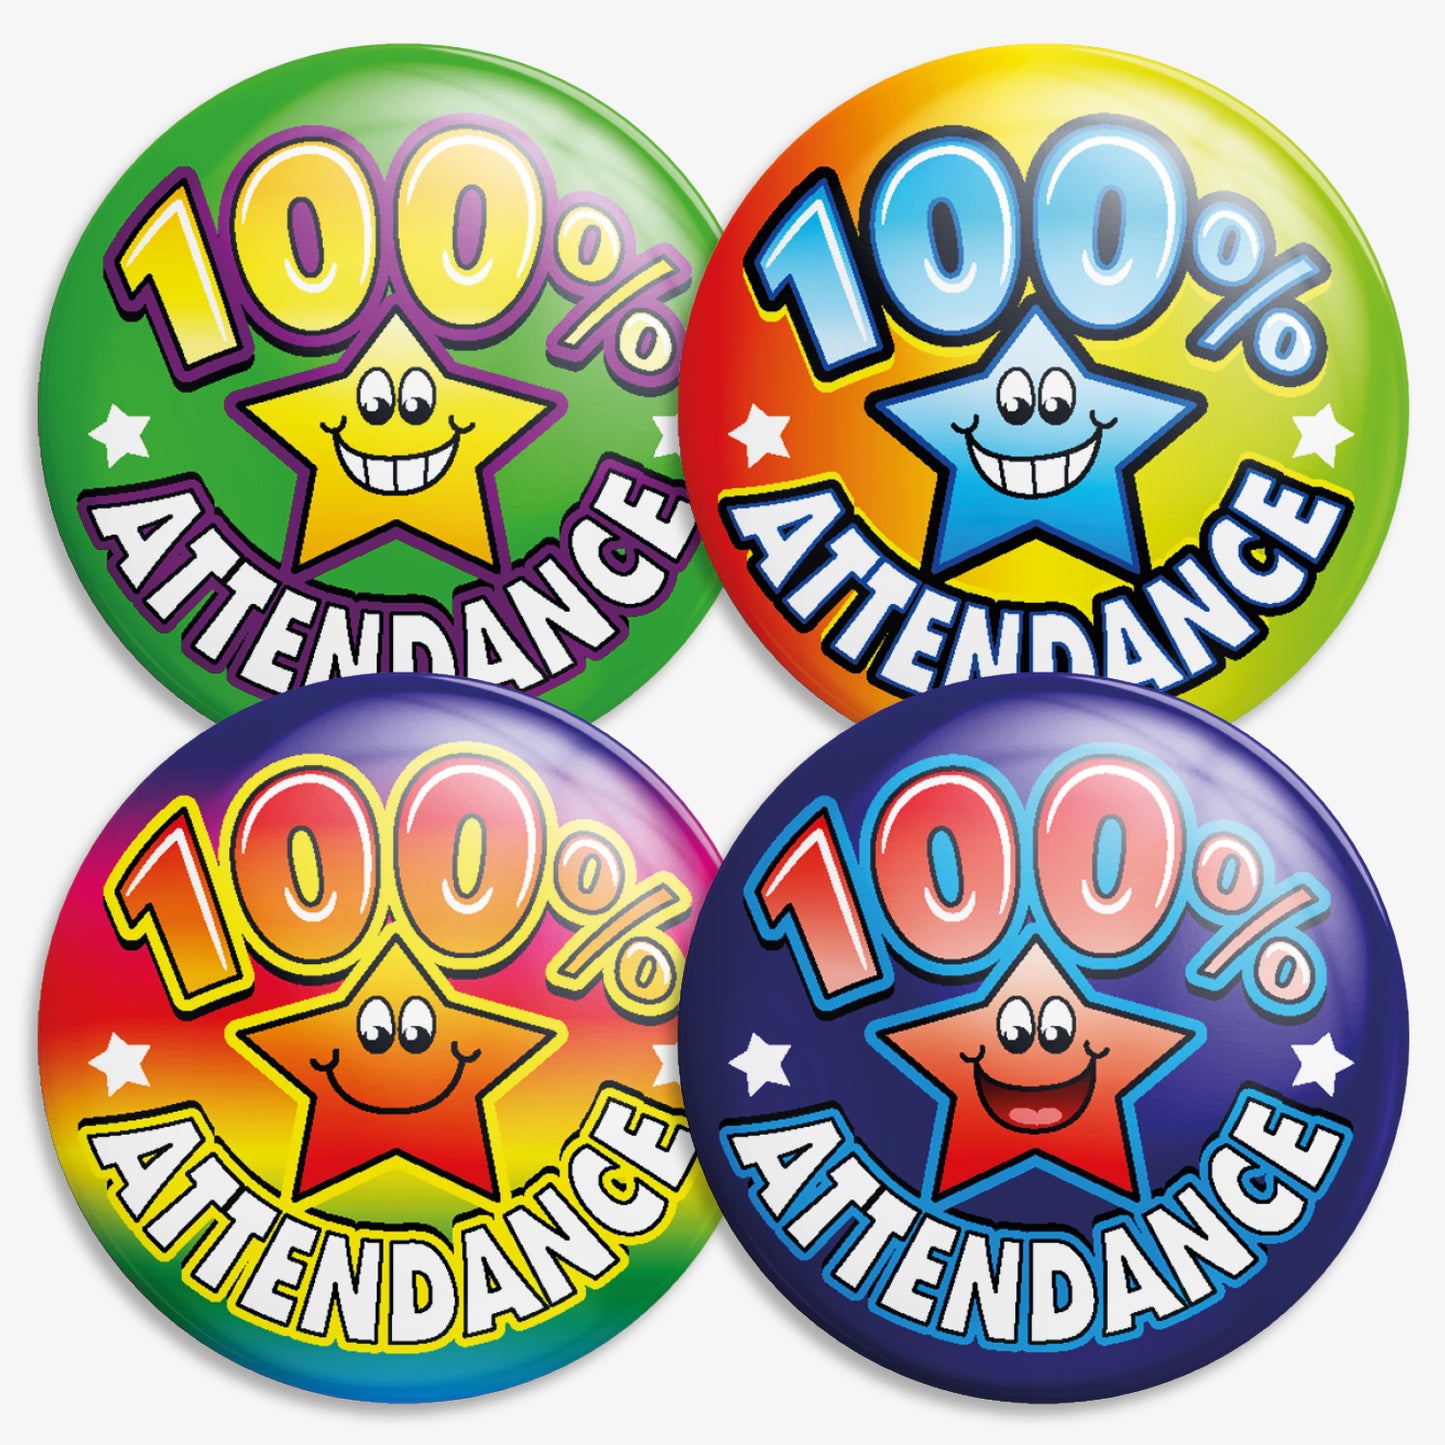 40 Star 100% Attendance Badges - 38mm